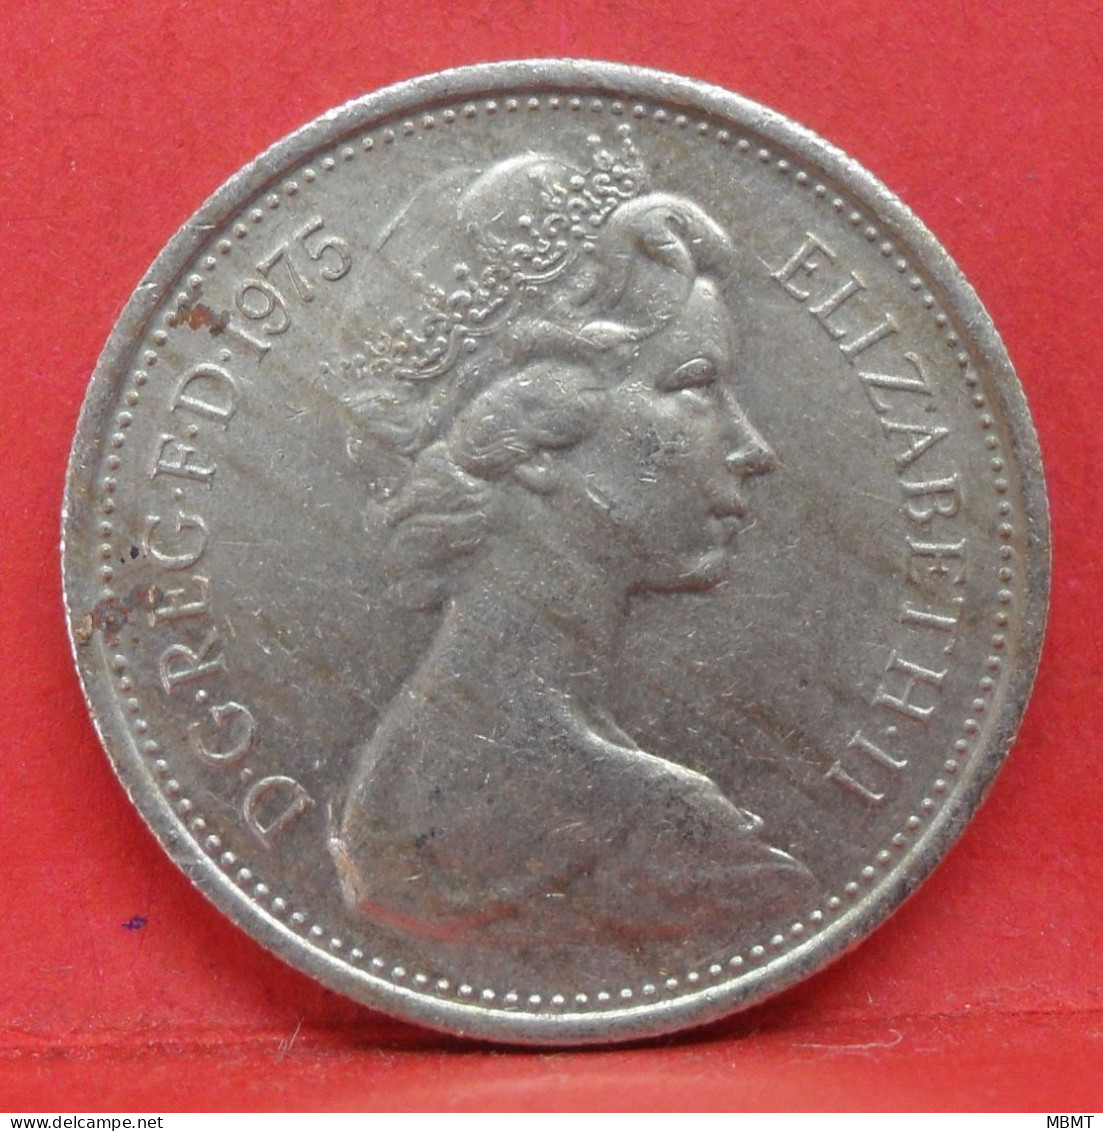 5 Pence 1975 - TB - Pièce Monnaie Grande-Bretagne - Article N°2767 - 5 Pence & 5 New Pence